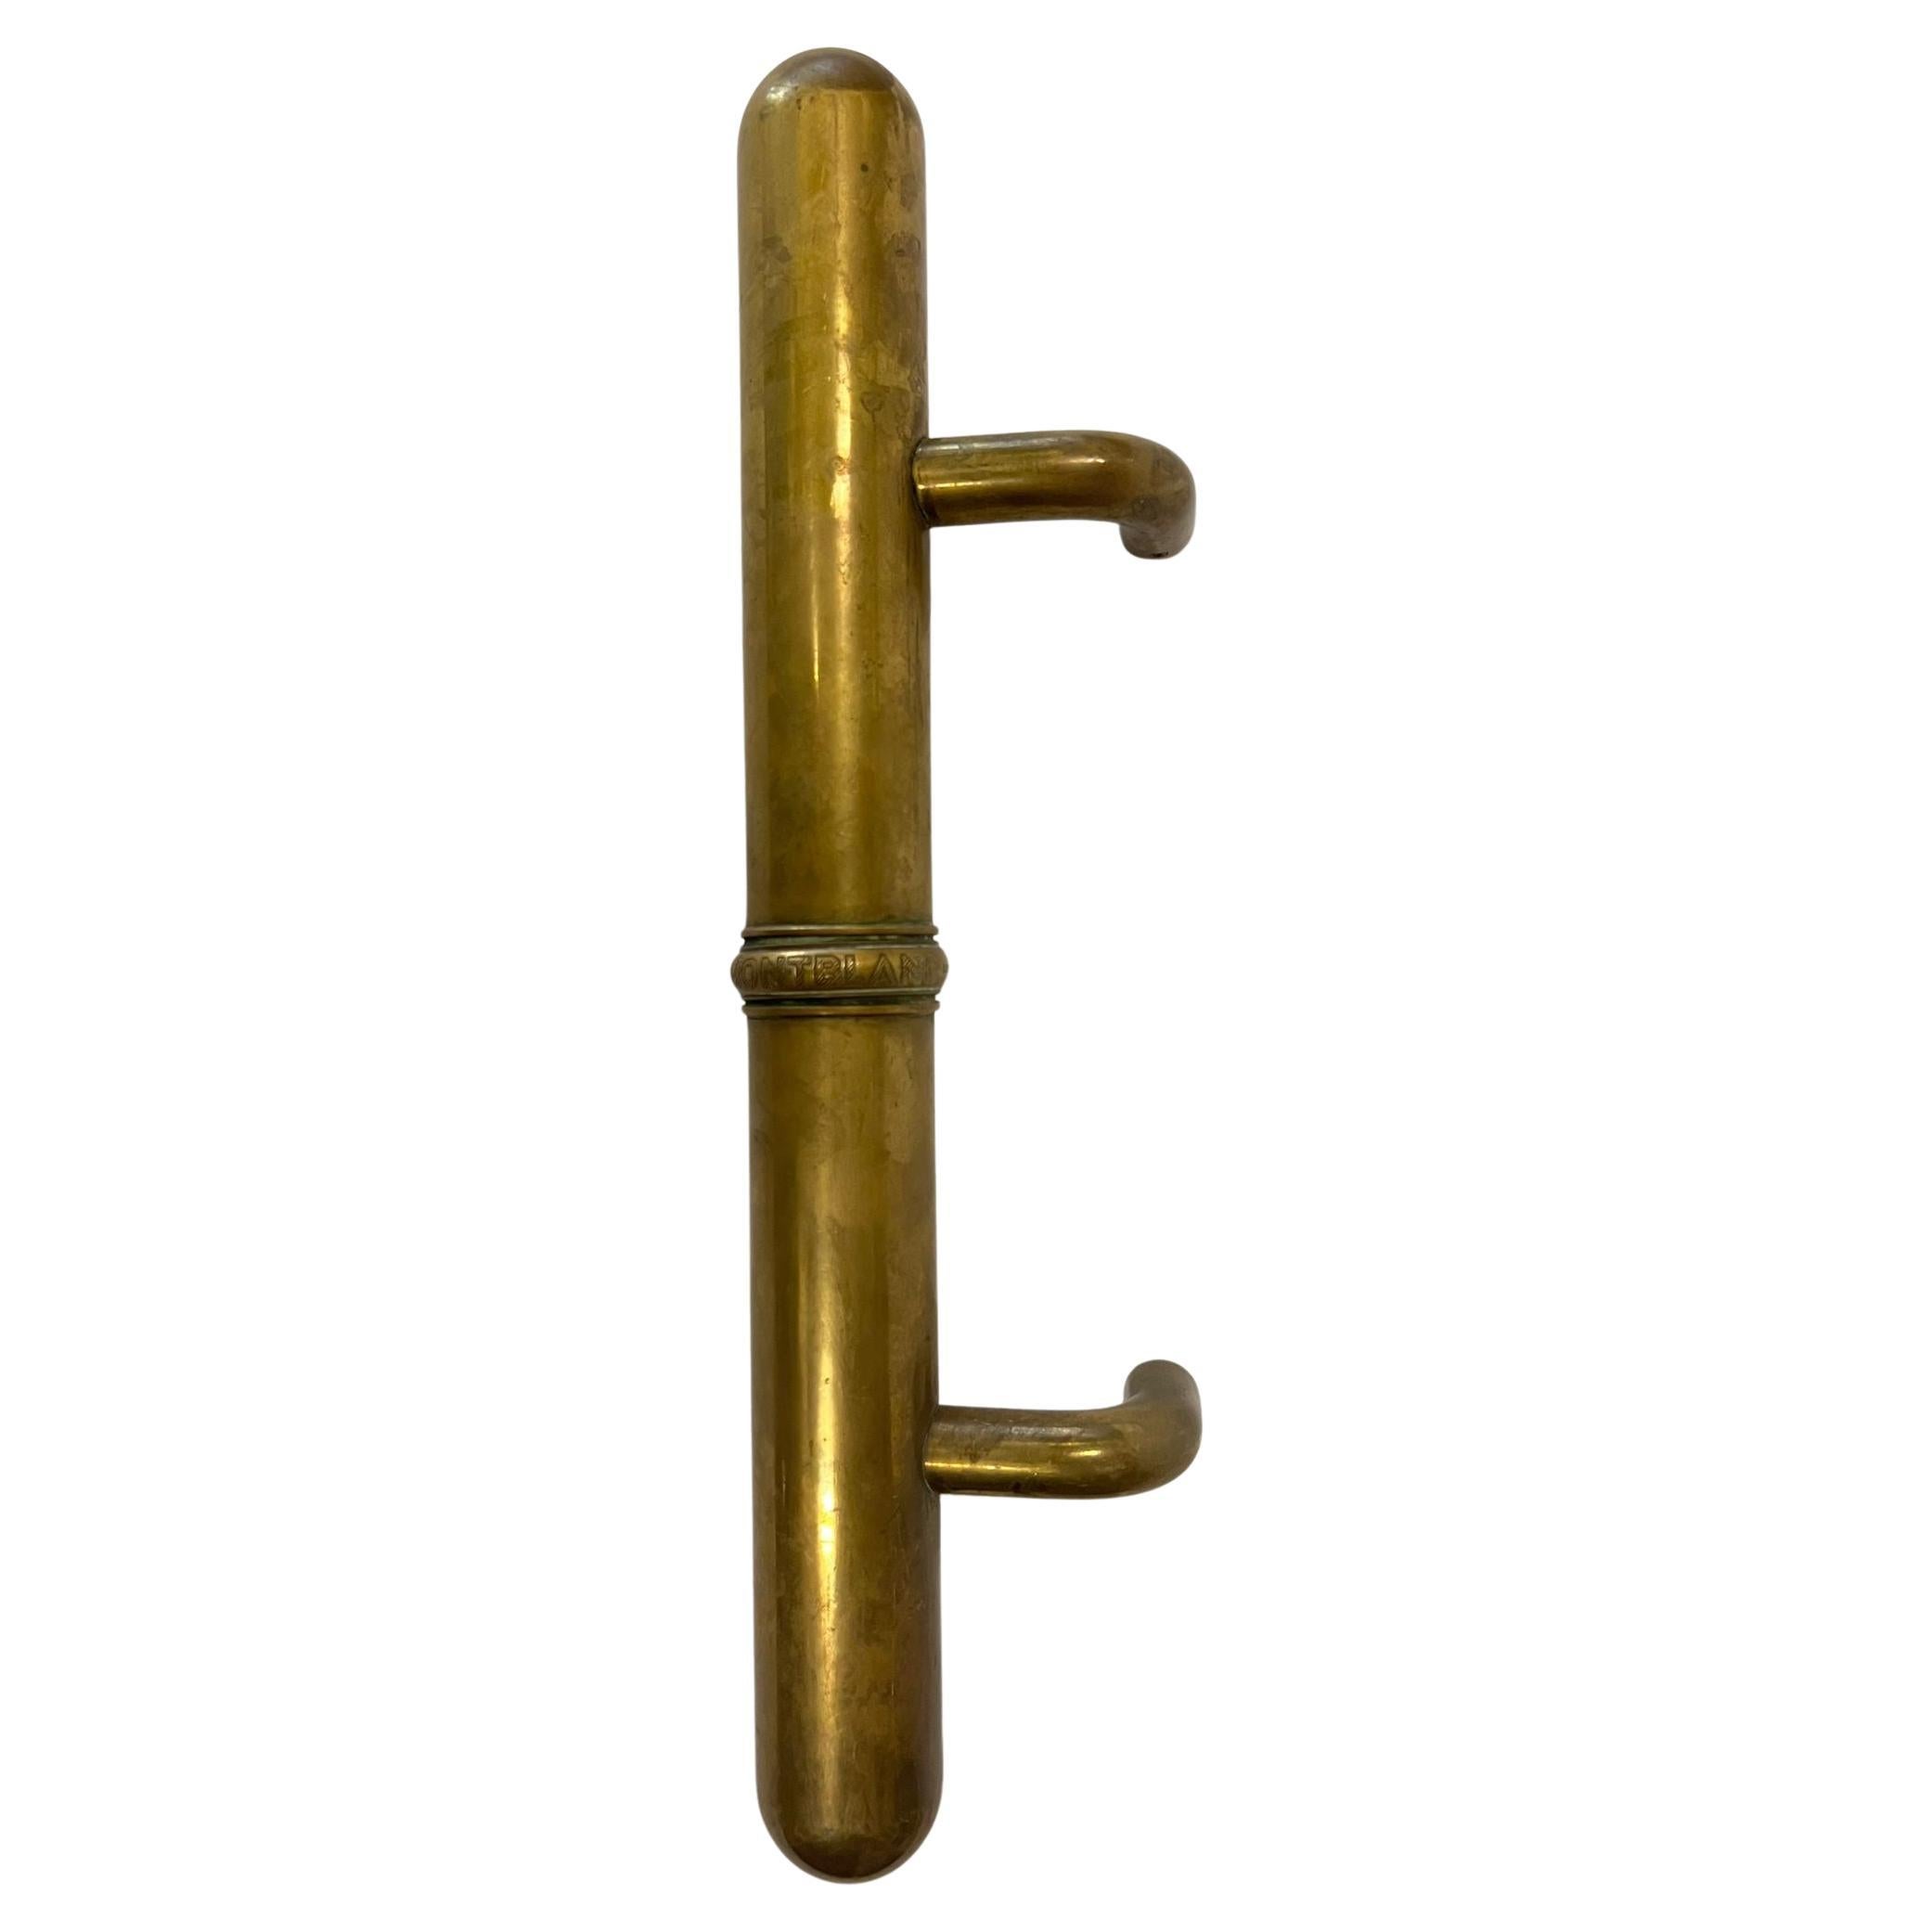 Rare Montblanc Masterpiece Solid Brass Door Handles For Sale 2